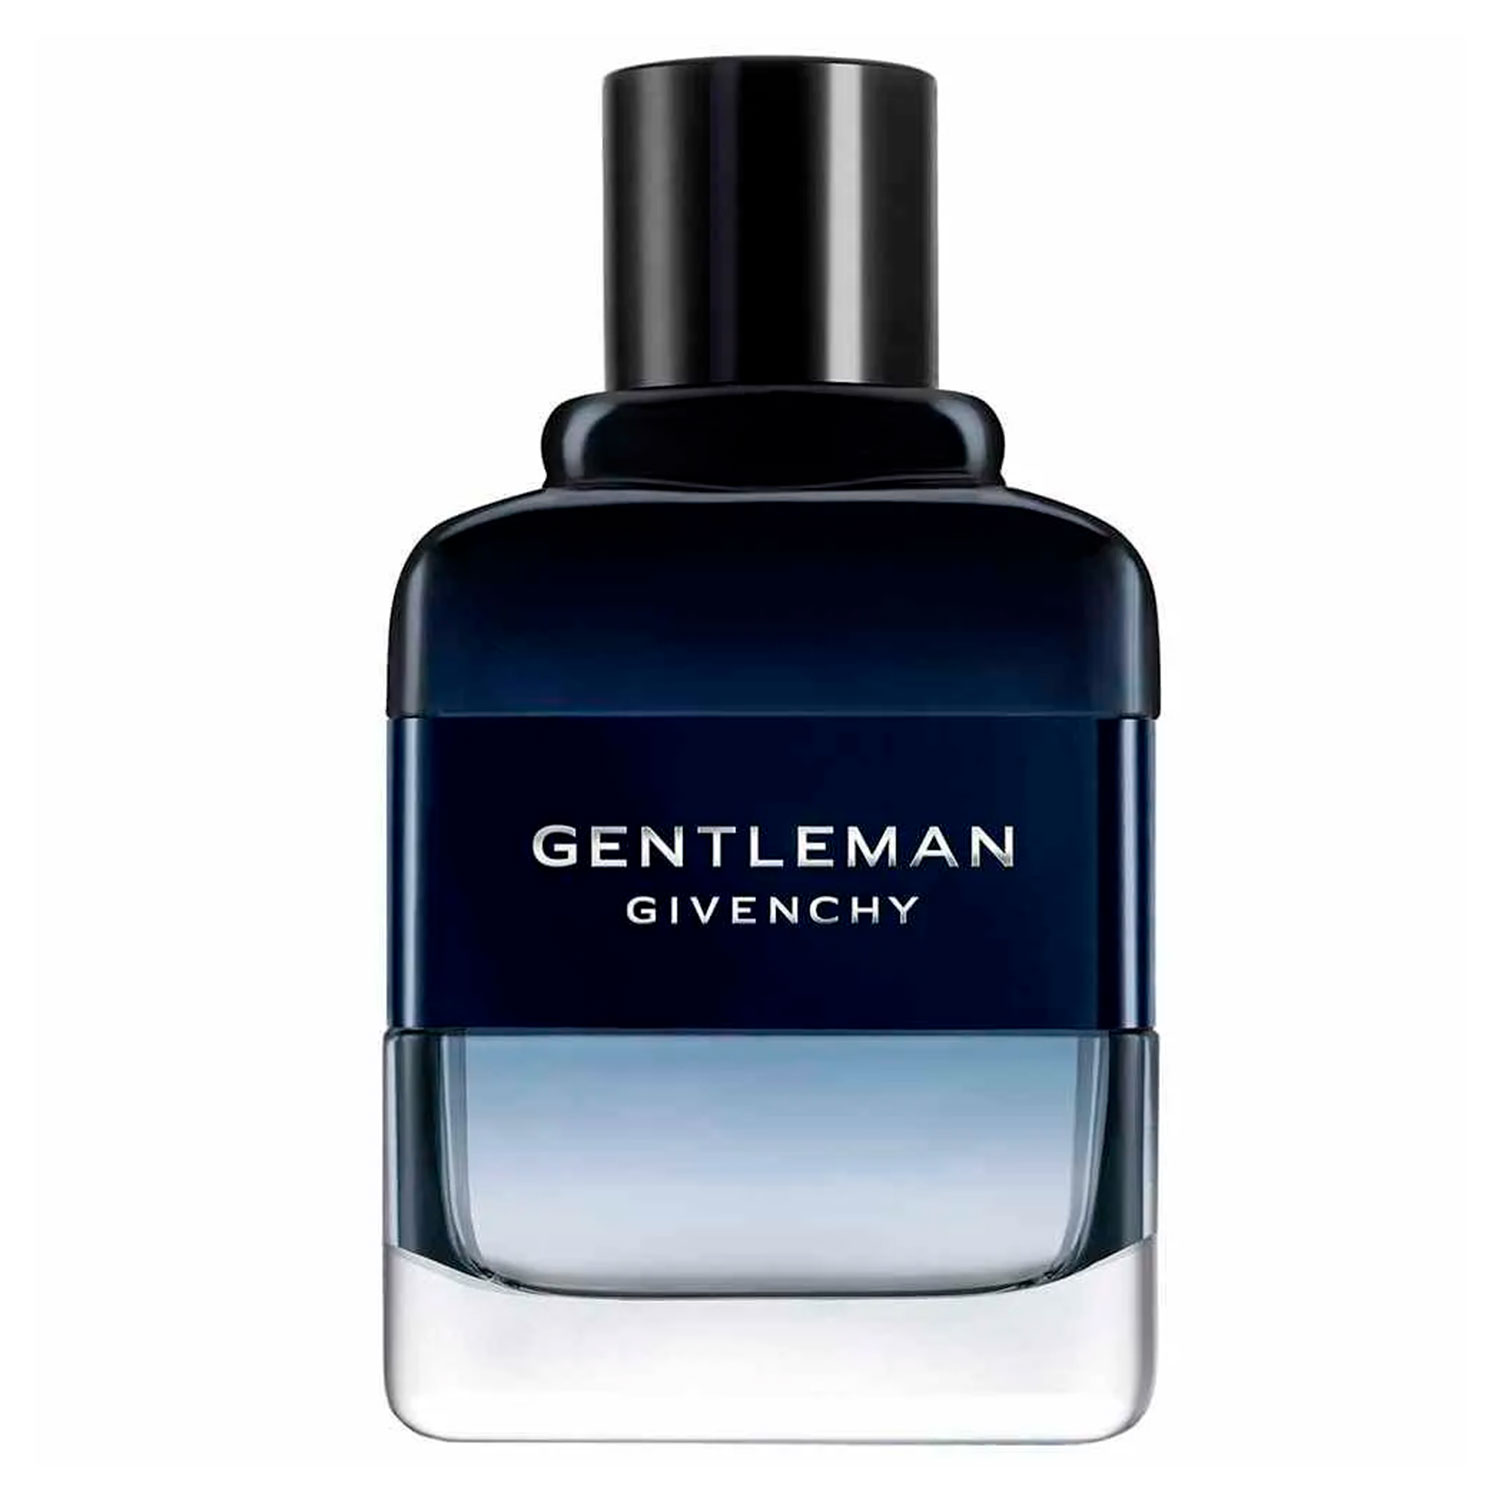 Perfume Givenchy Gentleman Intense Eau de Toilette Masculino 100ml
